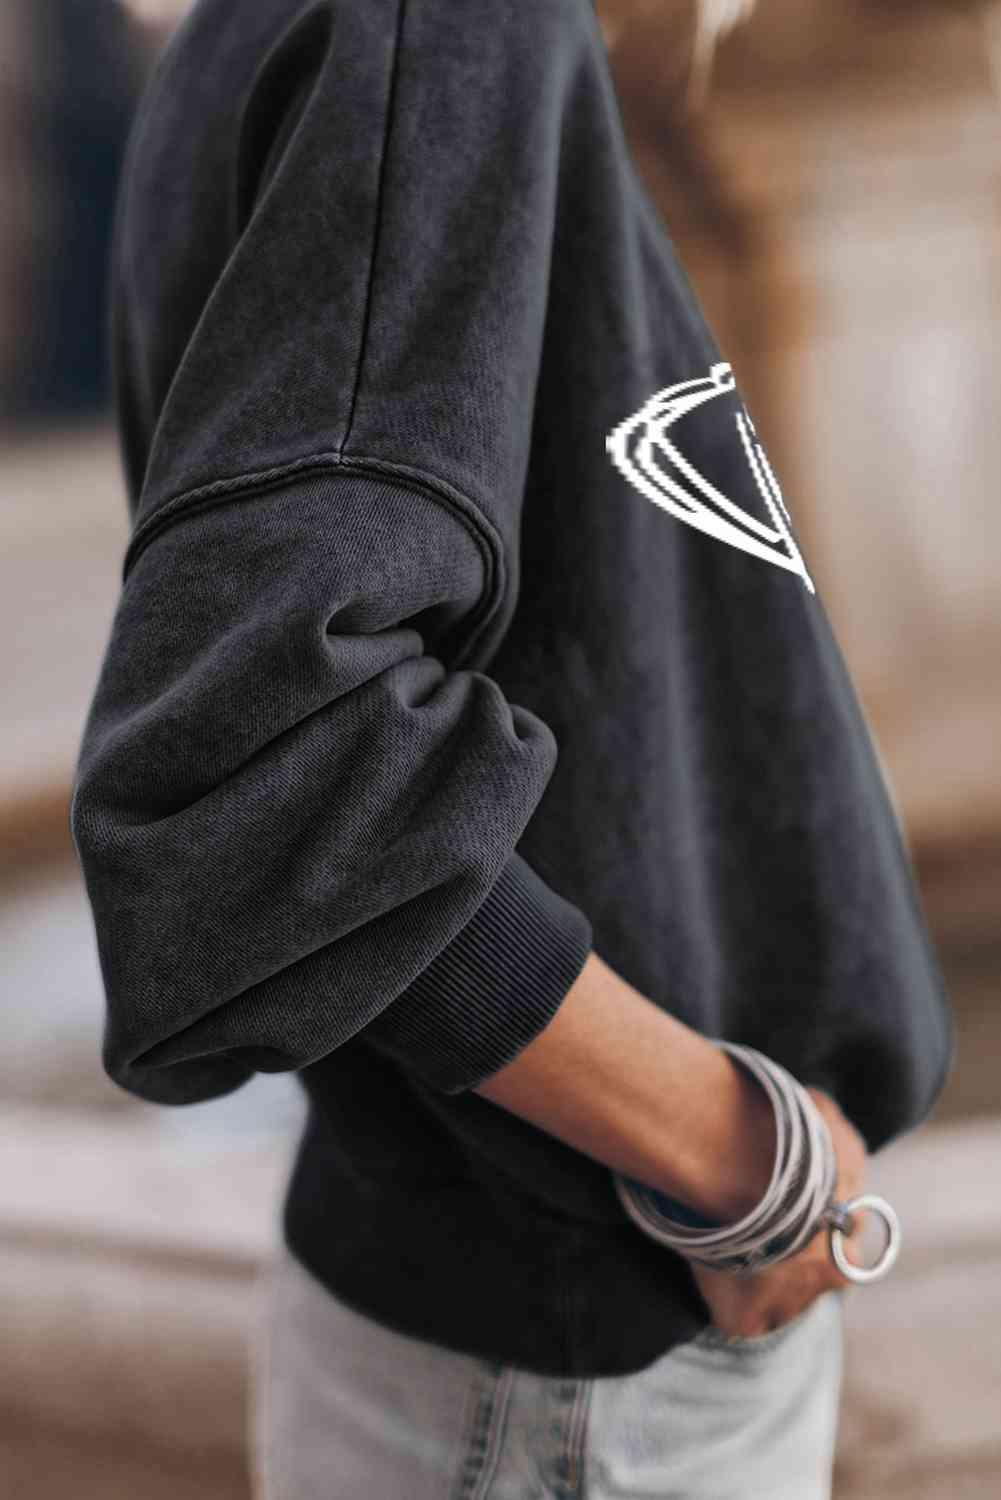 a woman wearing a black sweatshirt with a white logo on it